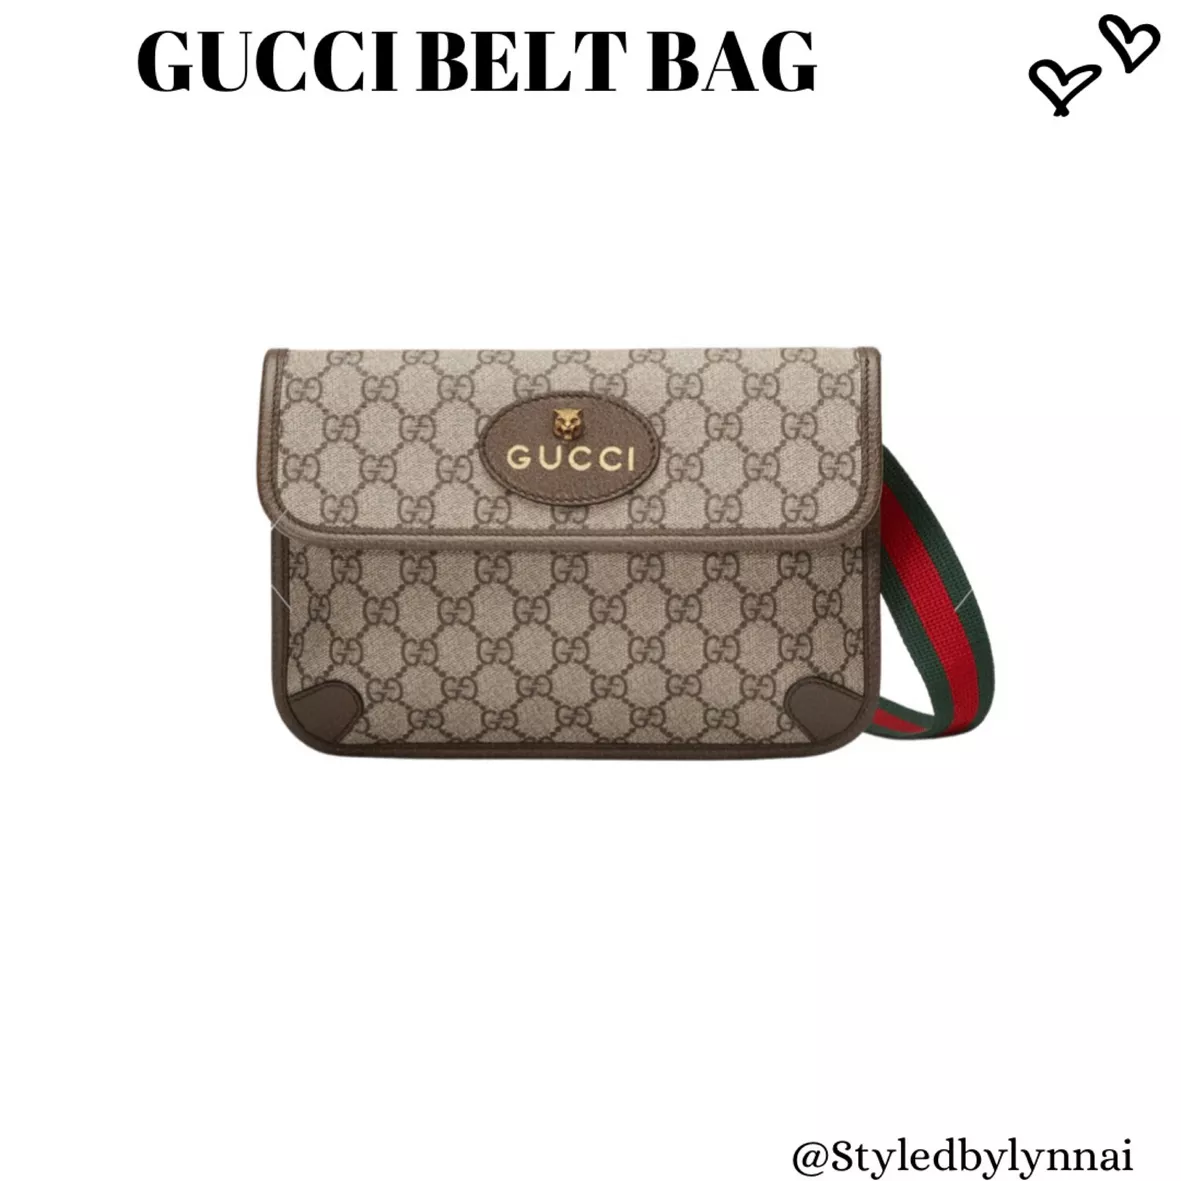 Gucci luxury handbag with belt.